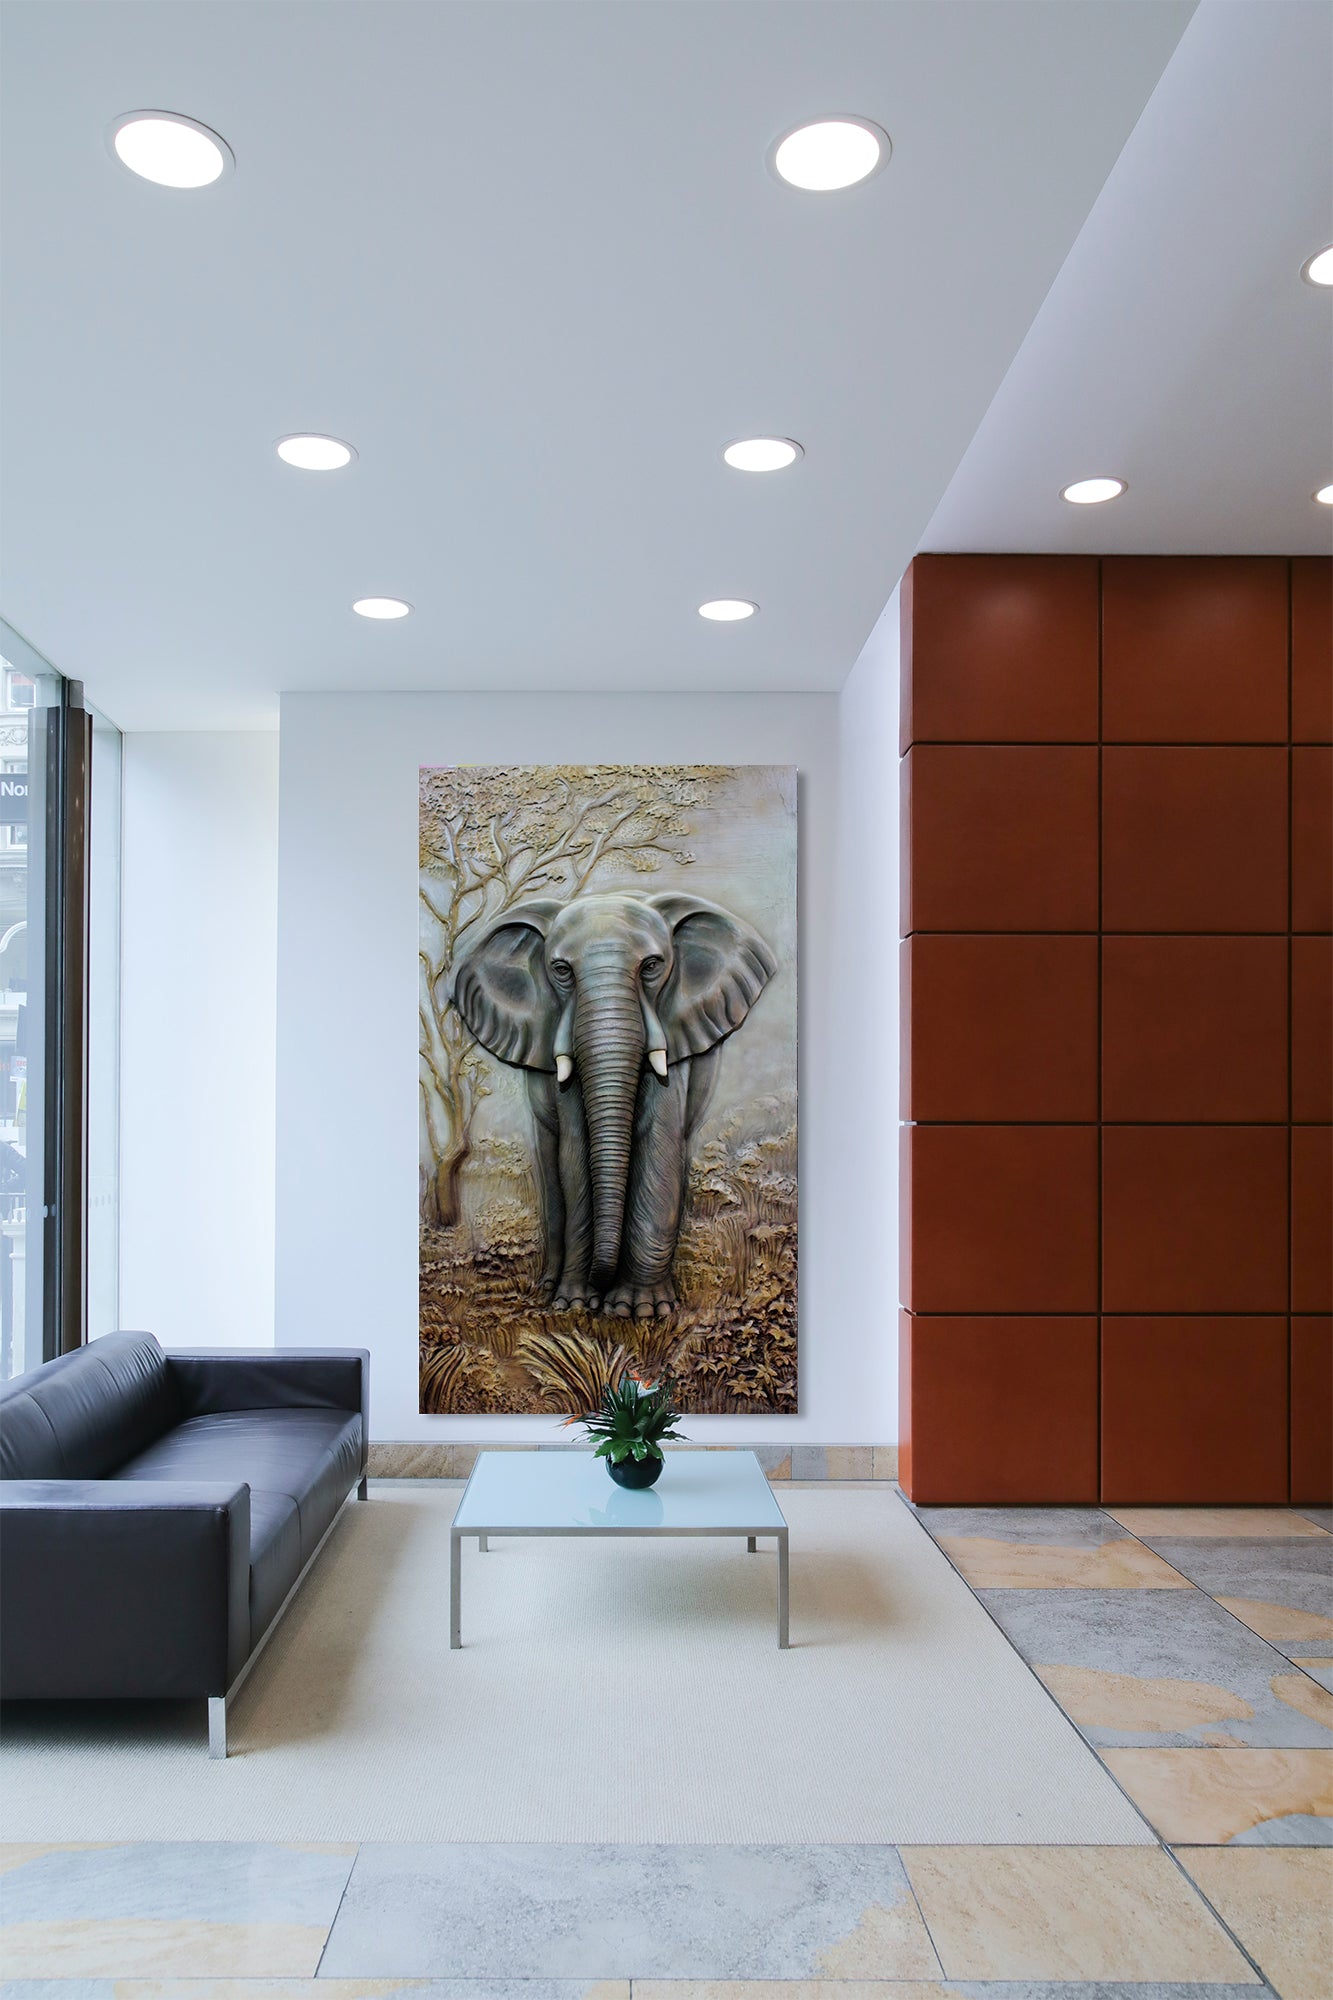 Elephant - Mural